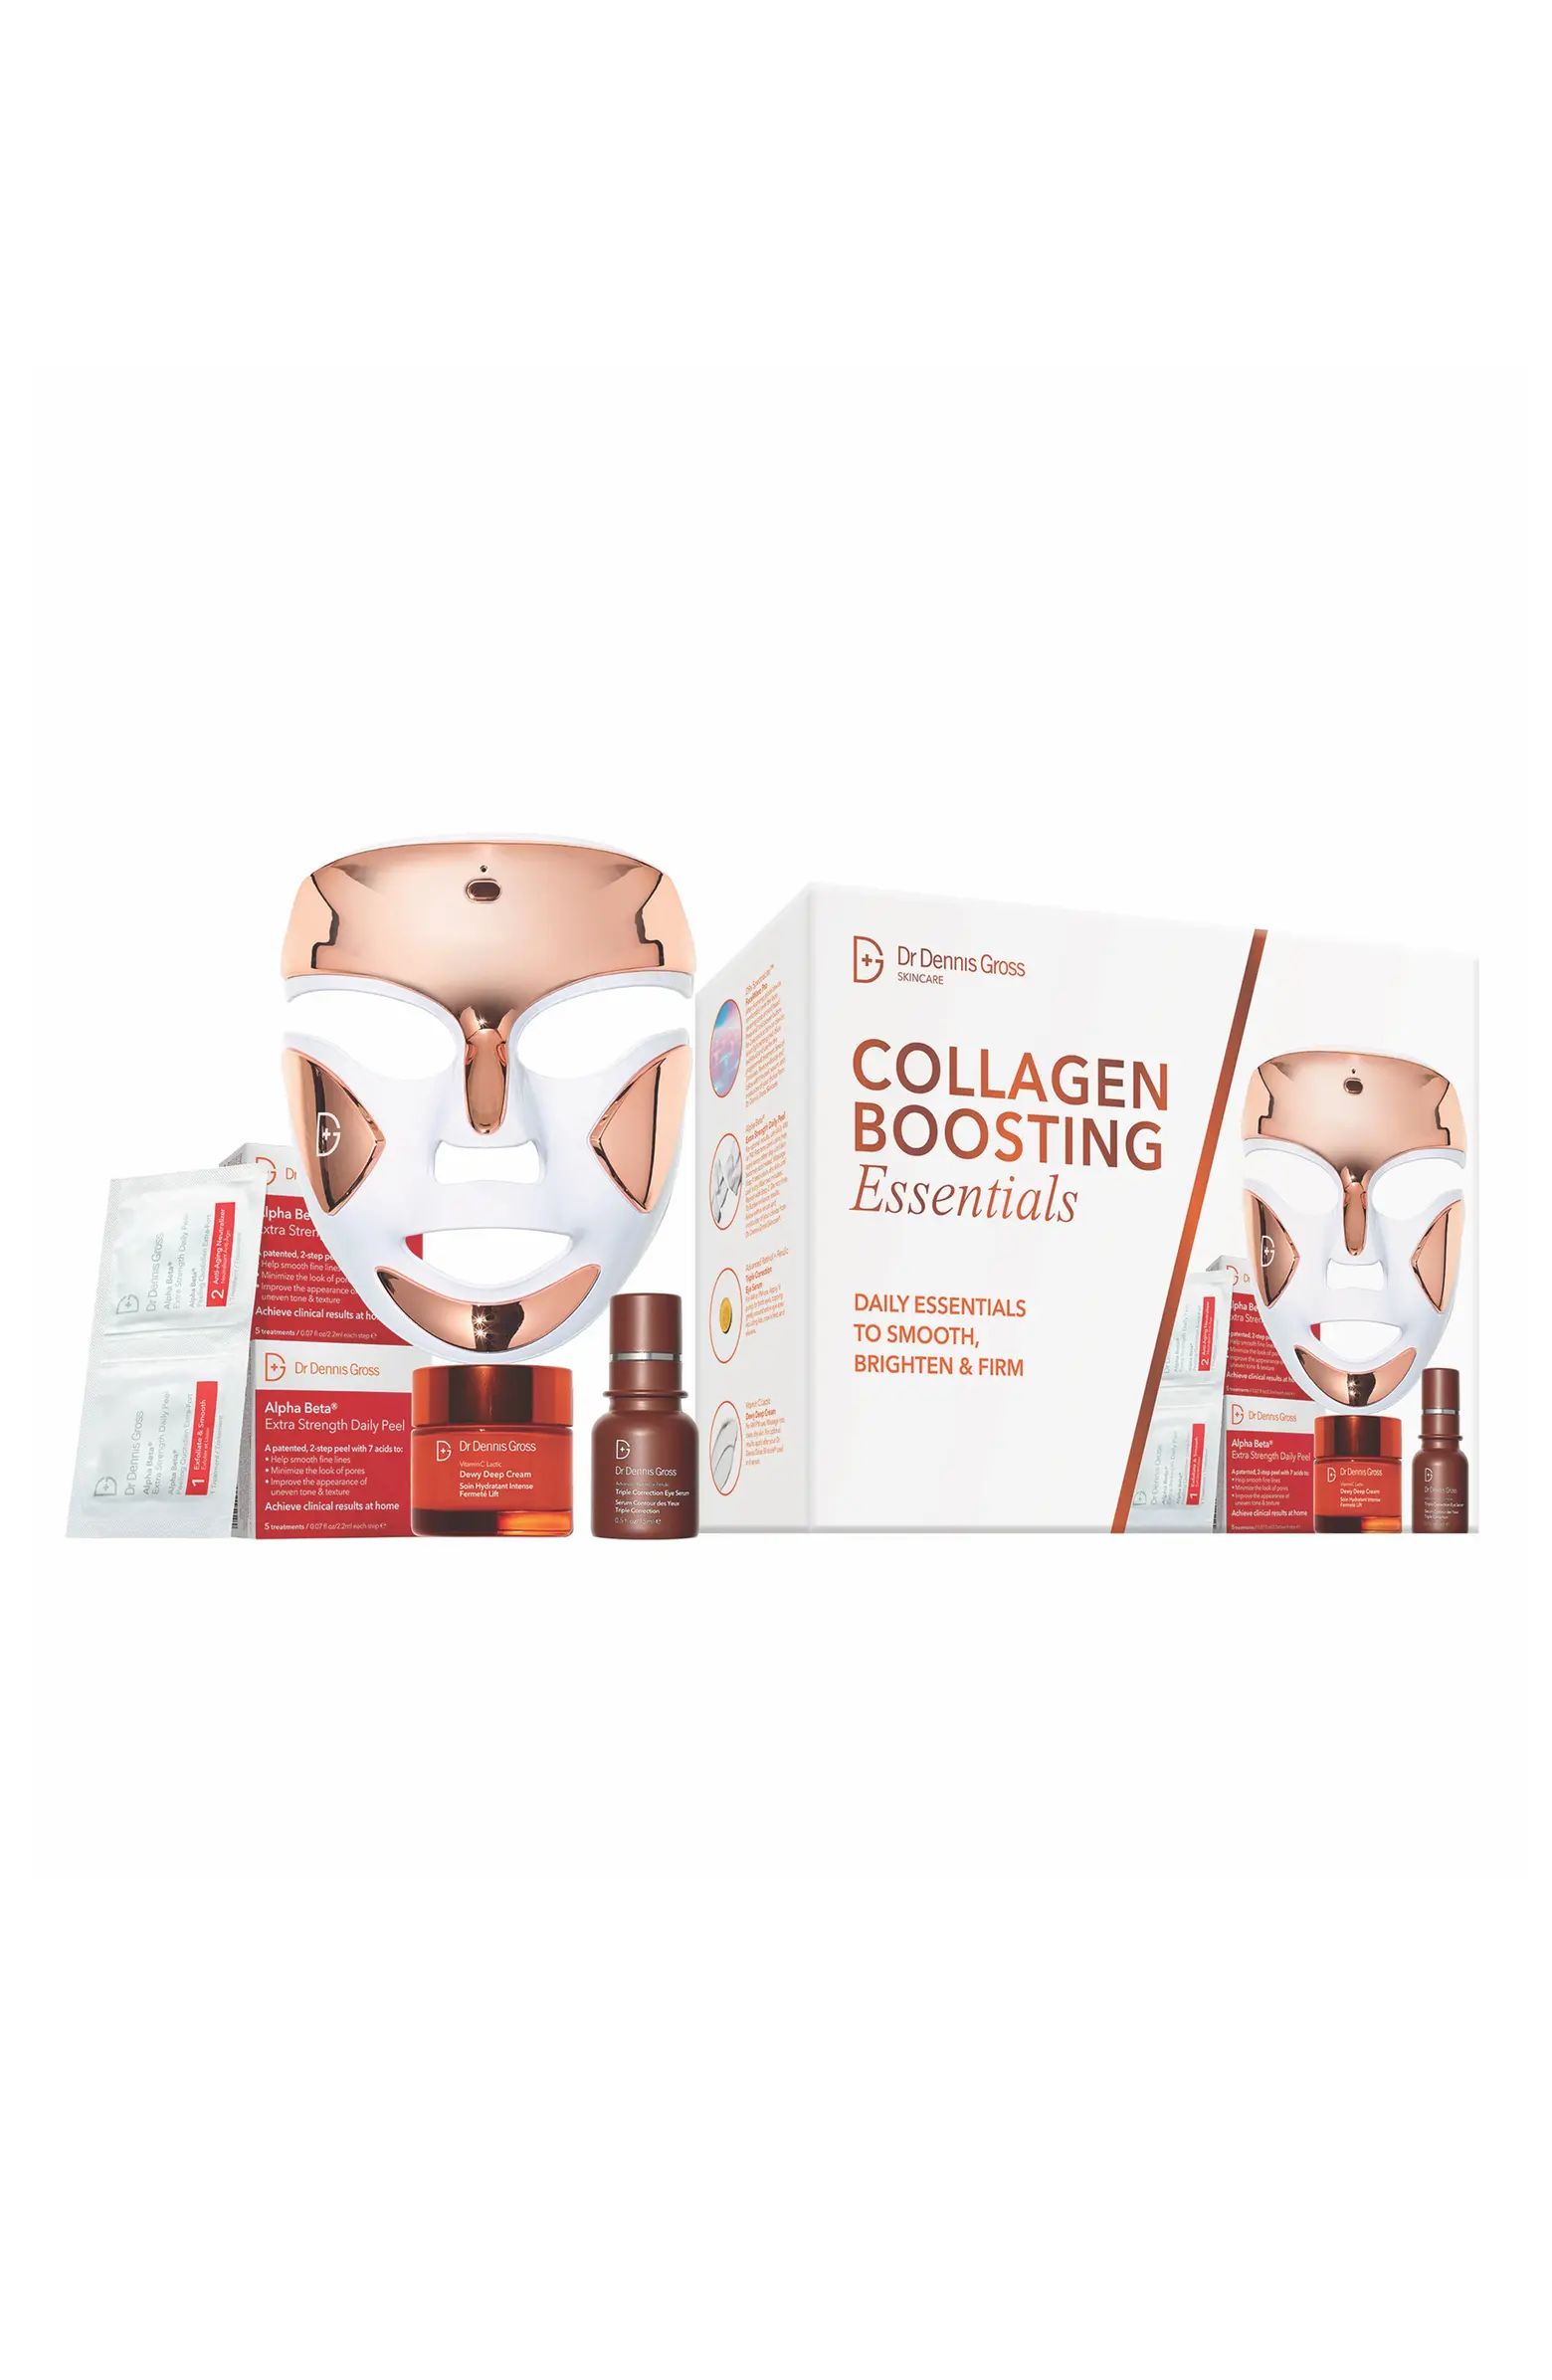 Collagen Boosting Essentials Set $641 Value | Nordstrom